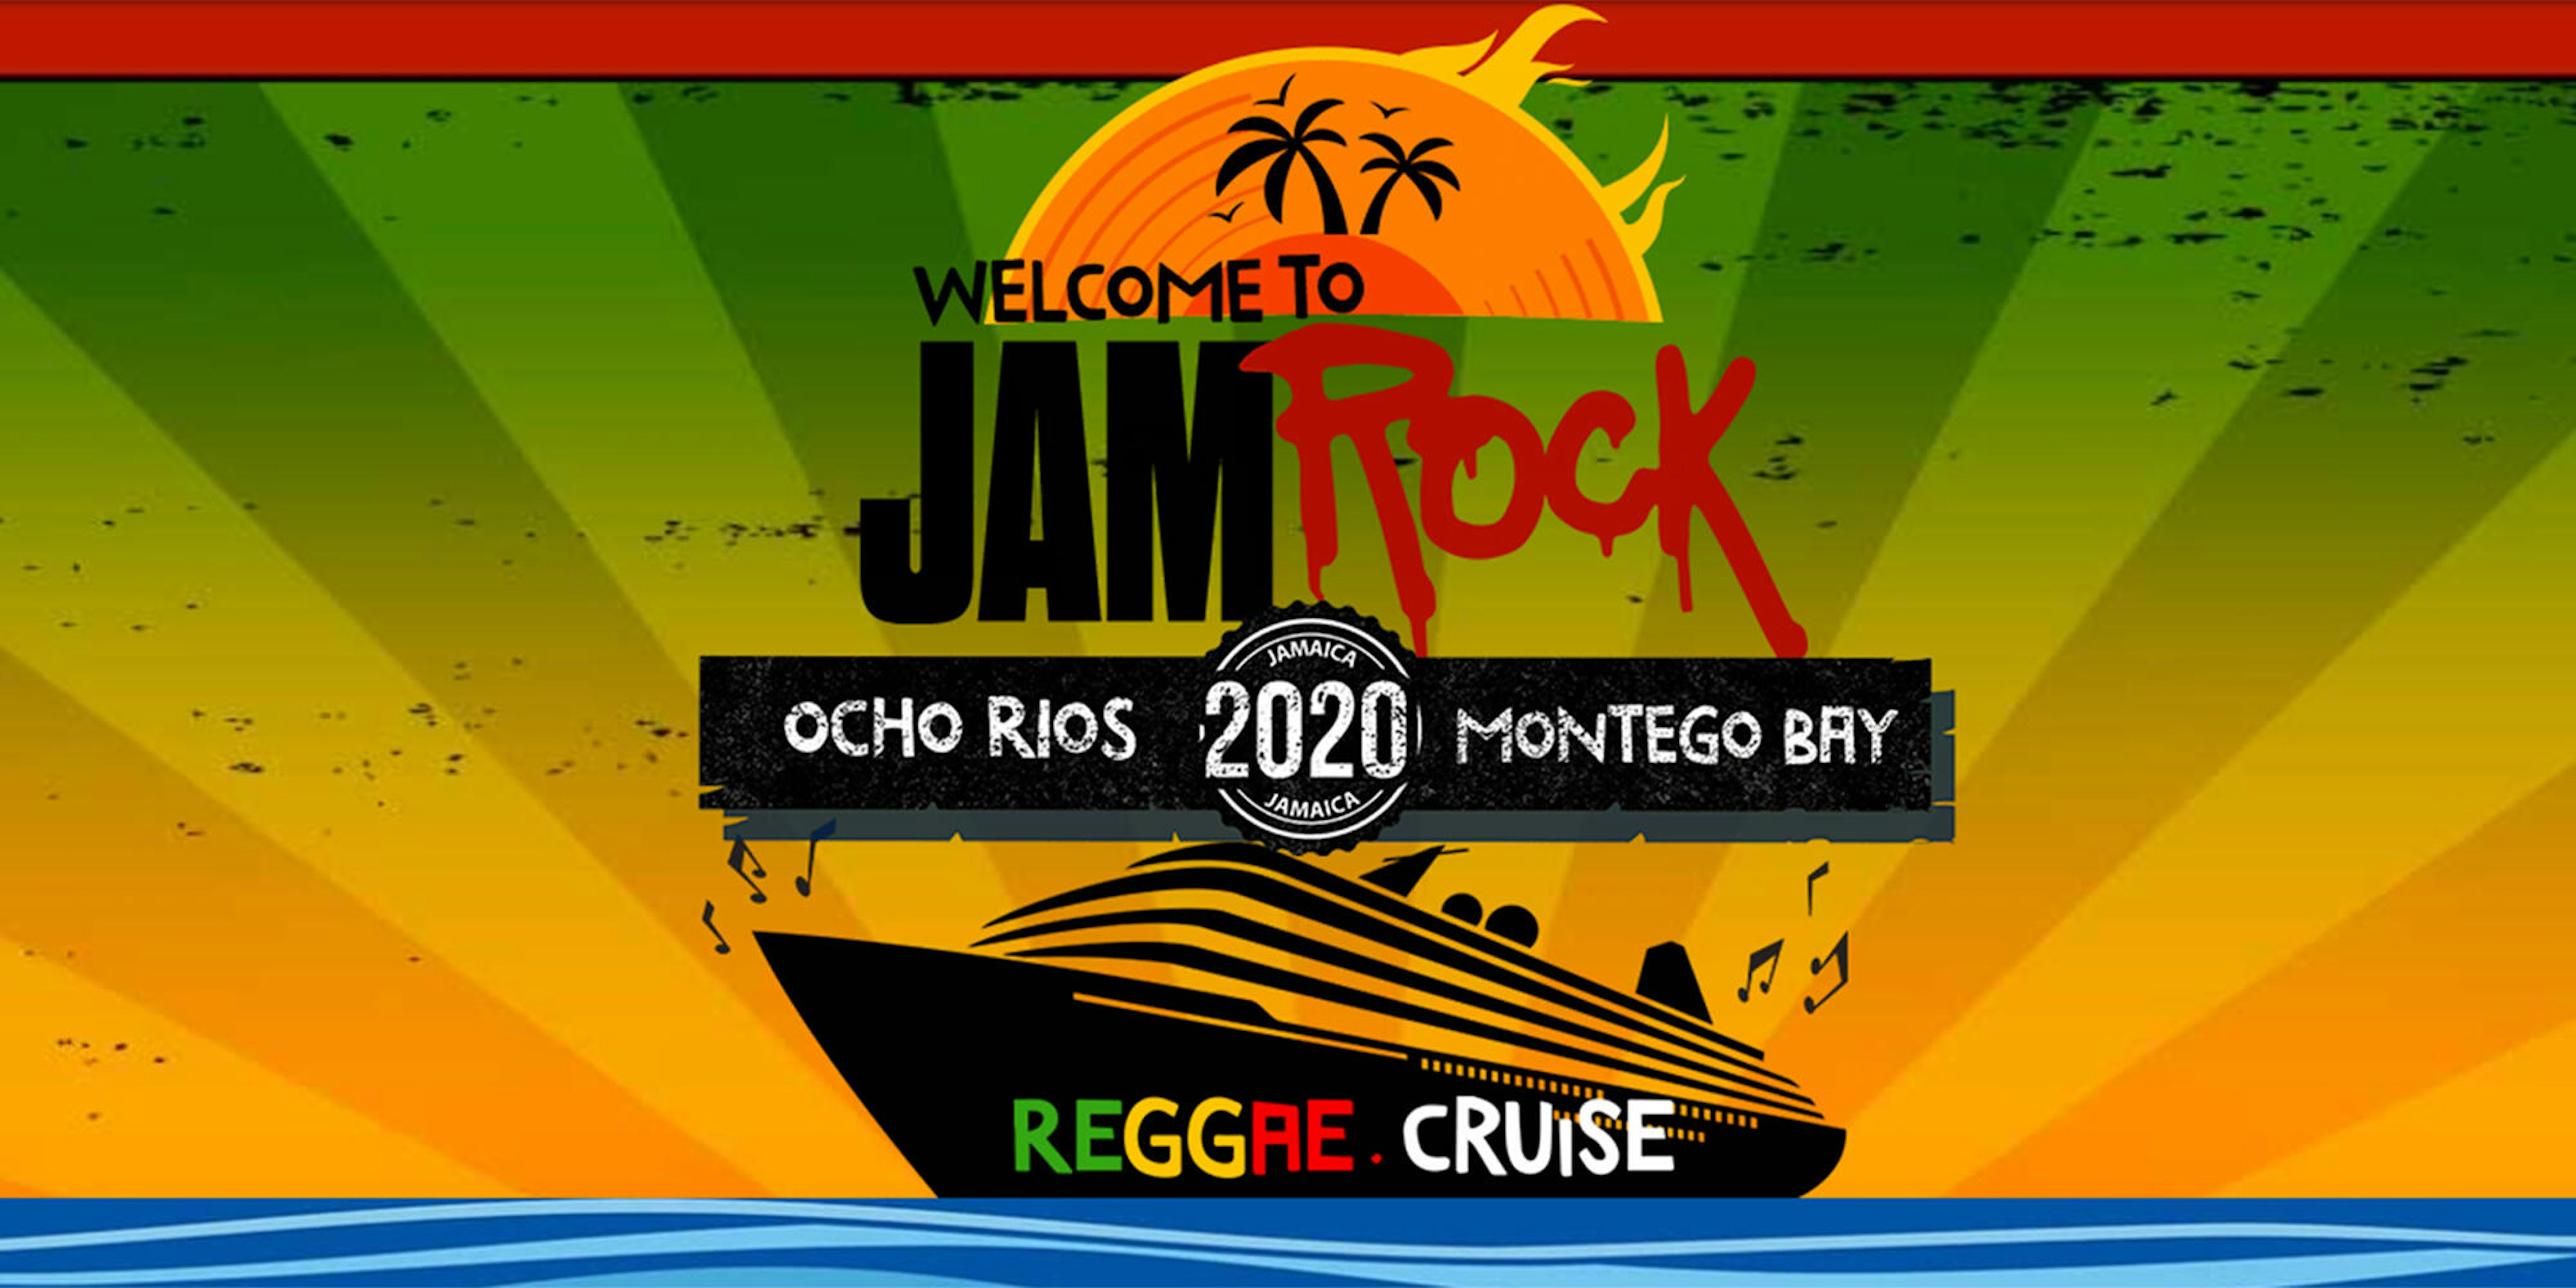 Jamrock Cruise 2020